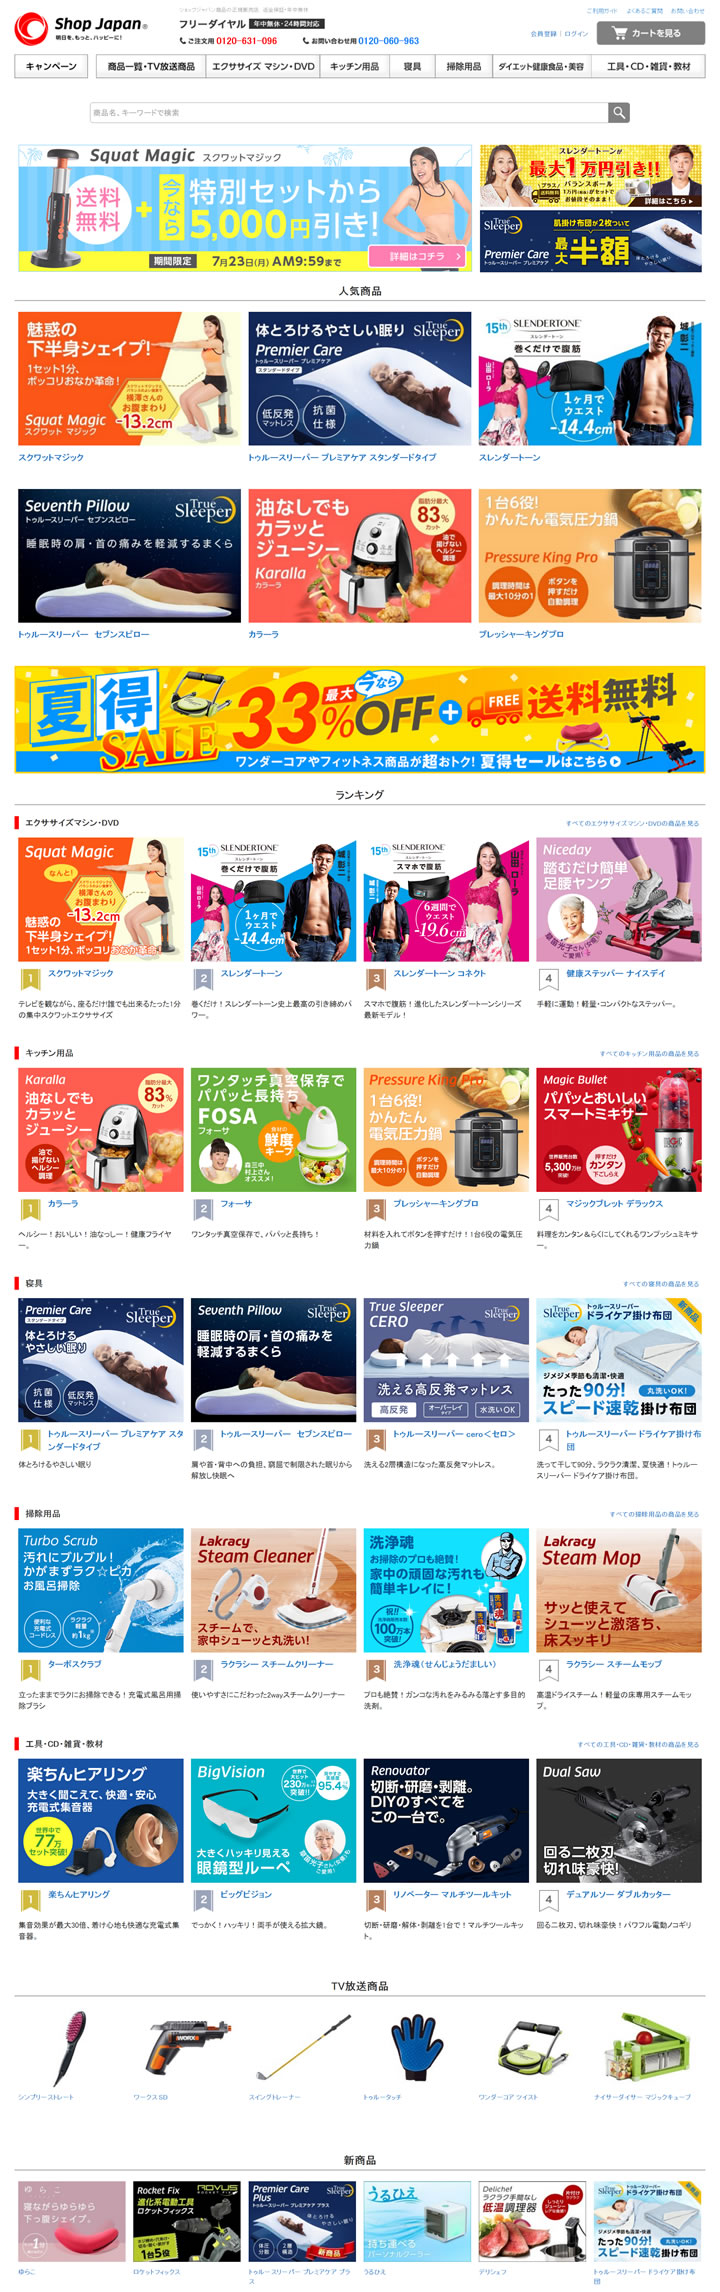 日本快乐生活方式购物网站：Shop Japan